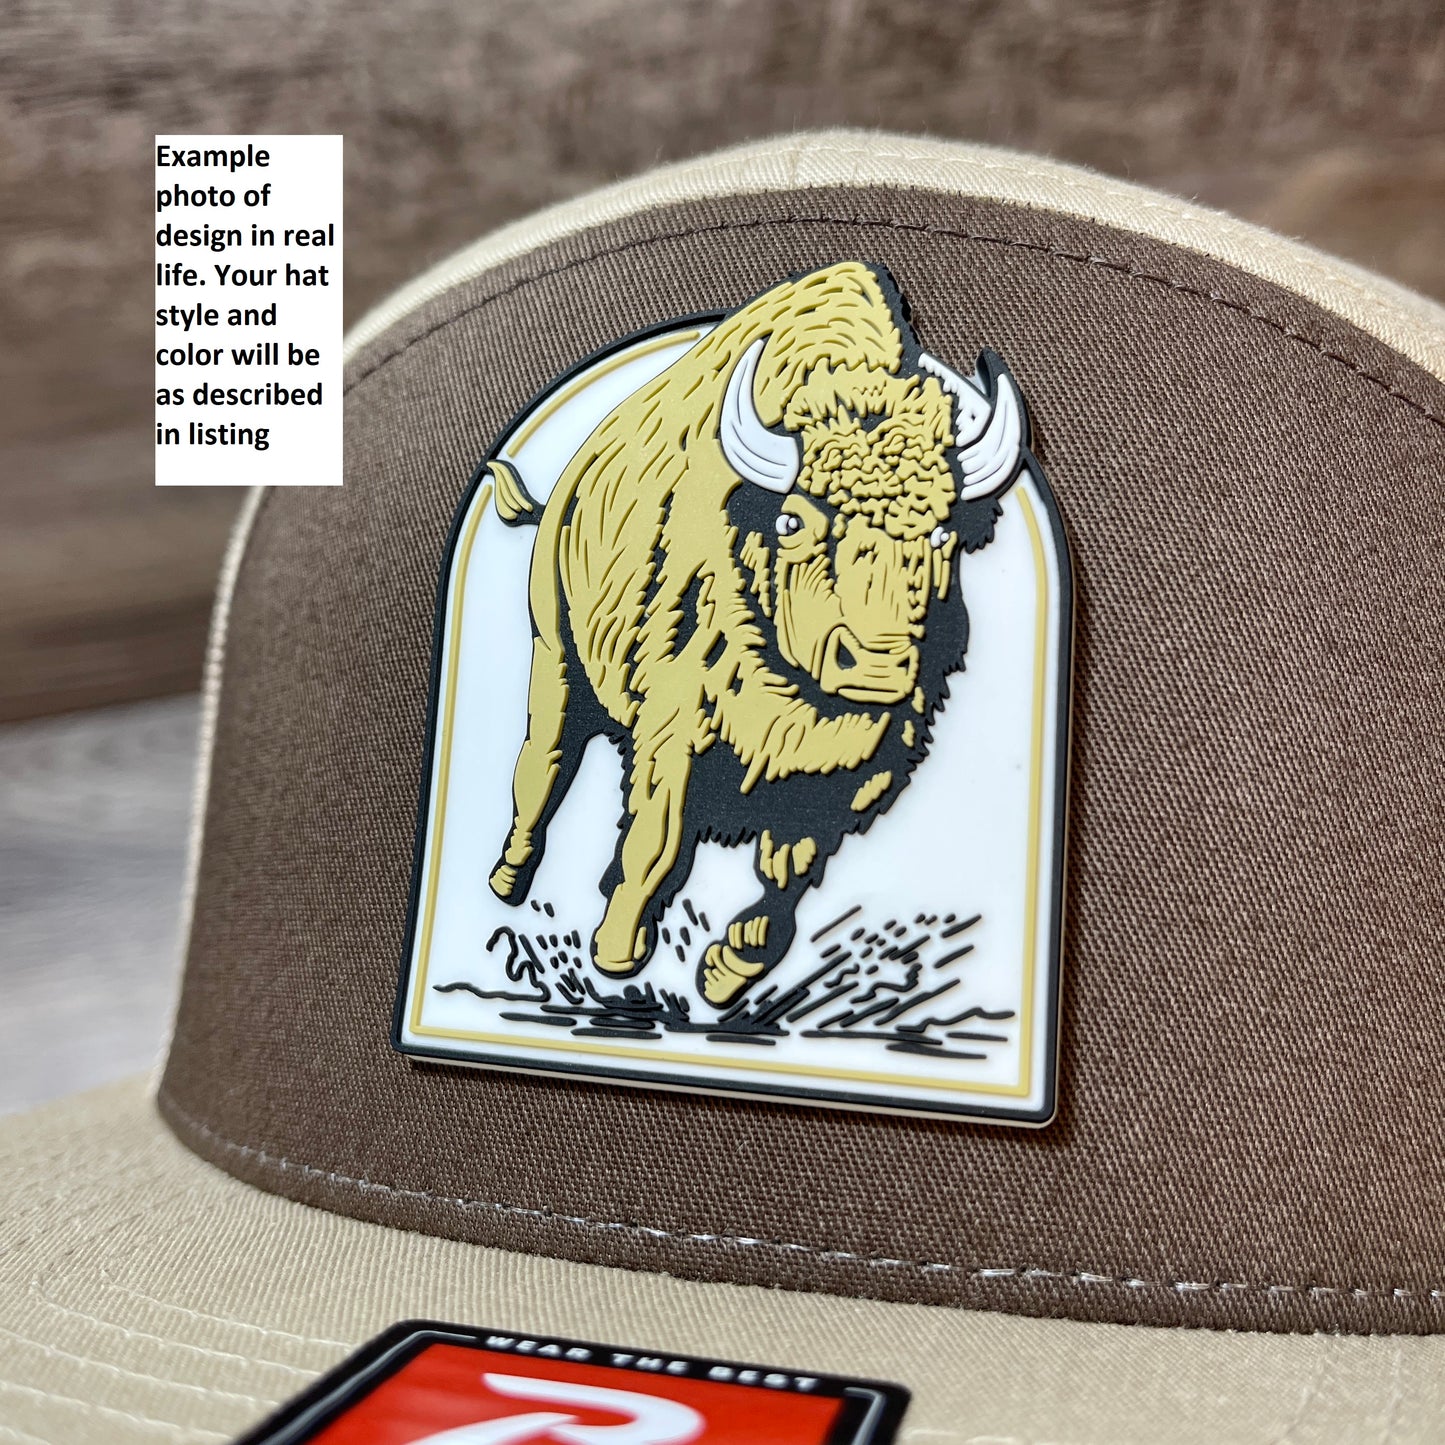 Colorado Wild Buffaloes Mascot Series 3D Snapback Trucker Hat- Heather Grey/ Black - Ten Gallon Hat Co.